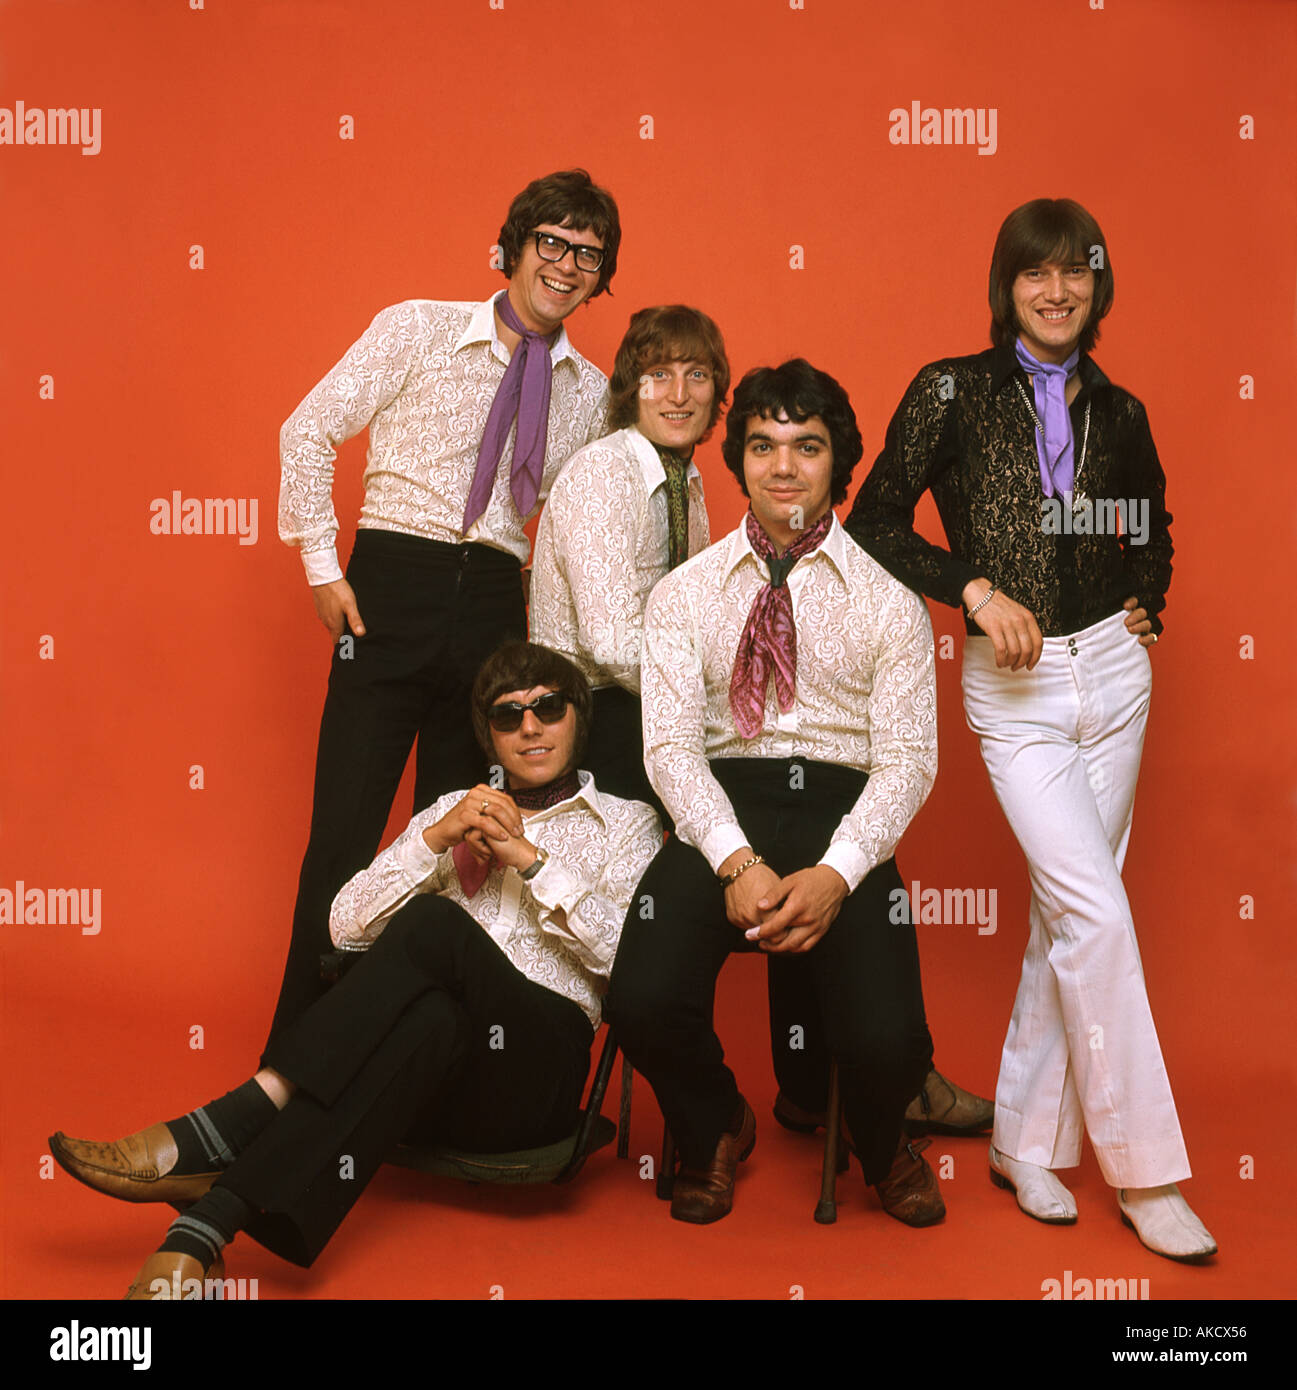 VANITY FAIR - groupe pop britannique en 1968. Photo Tony Gale Photo Stock -  Alamy